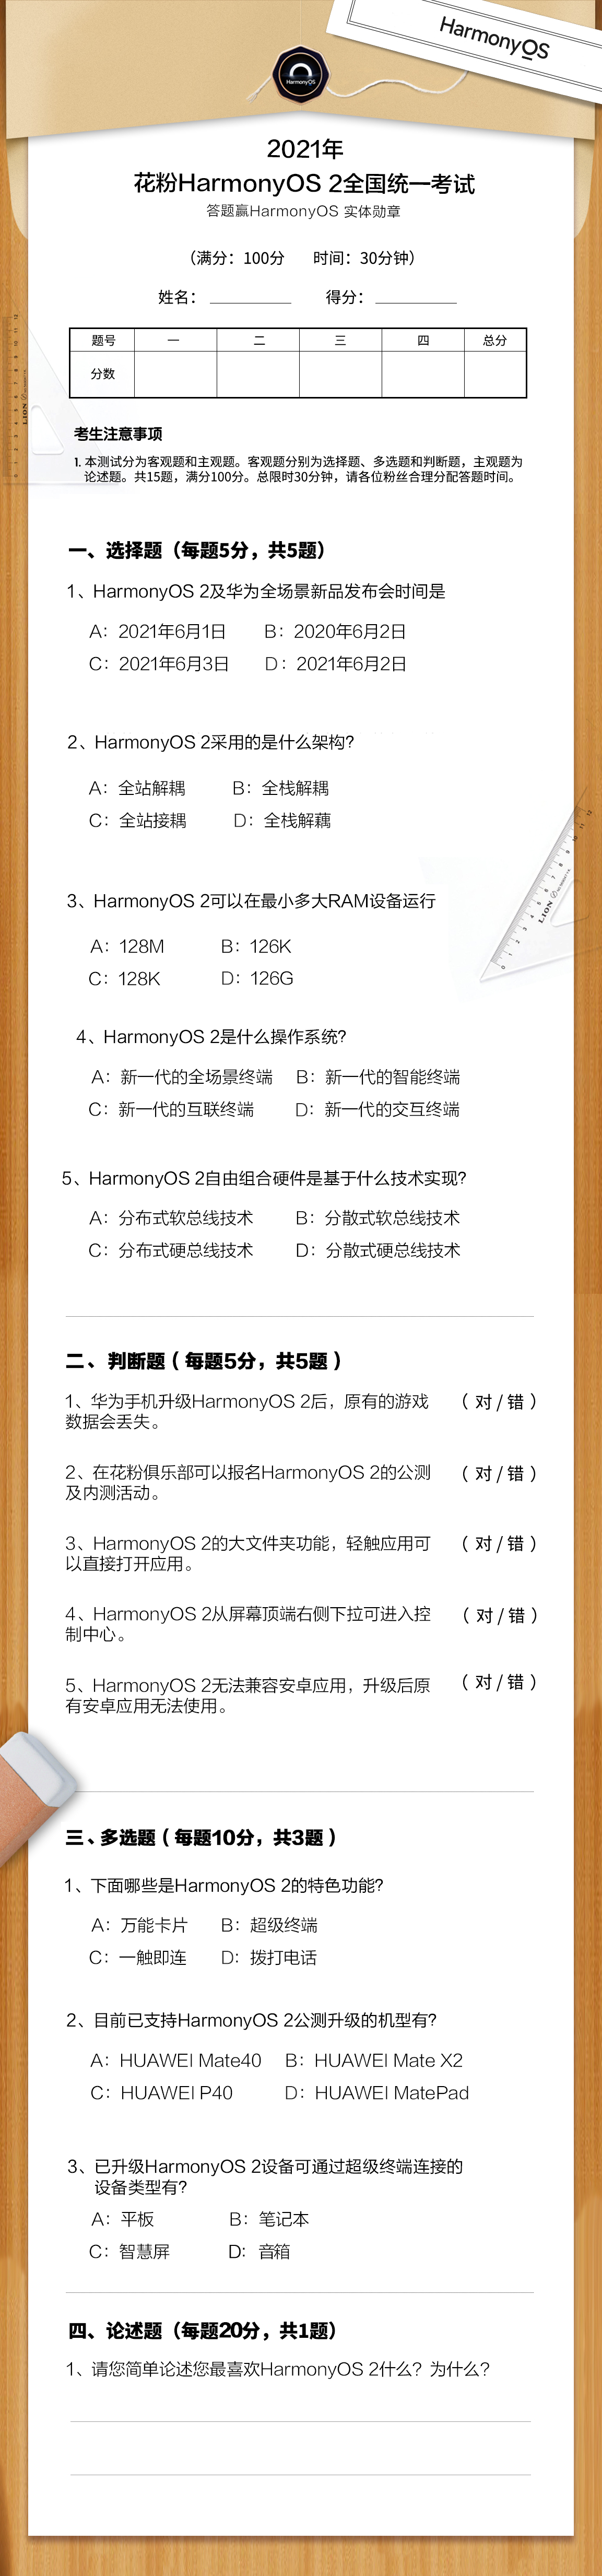 HarmonyOS 2 knowledge test